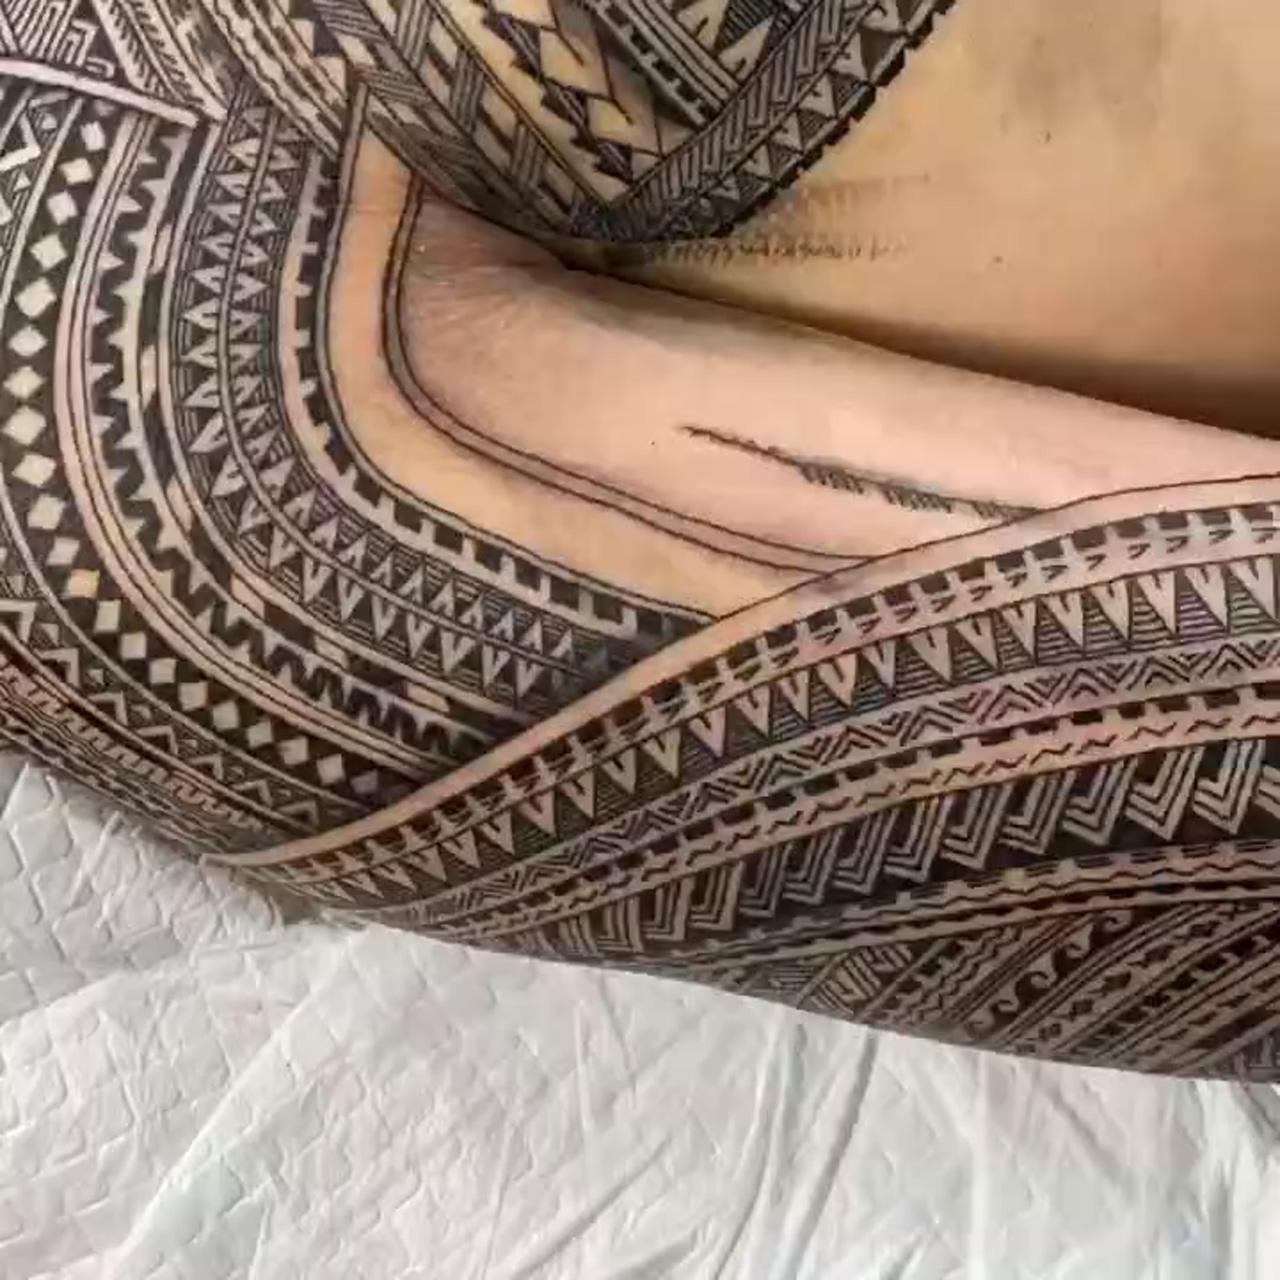 Freehand tattooing ideas michael fatutoa; maori tattoo arm